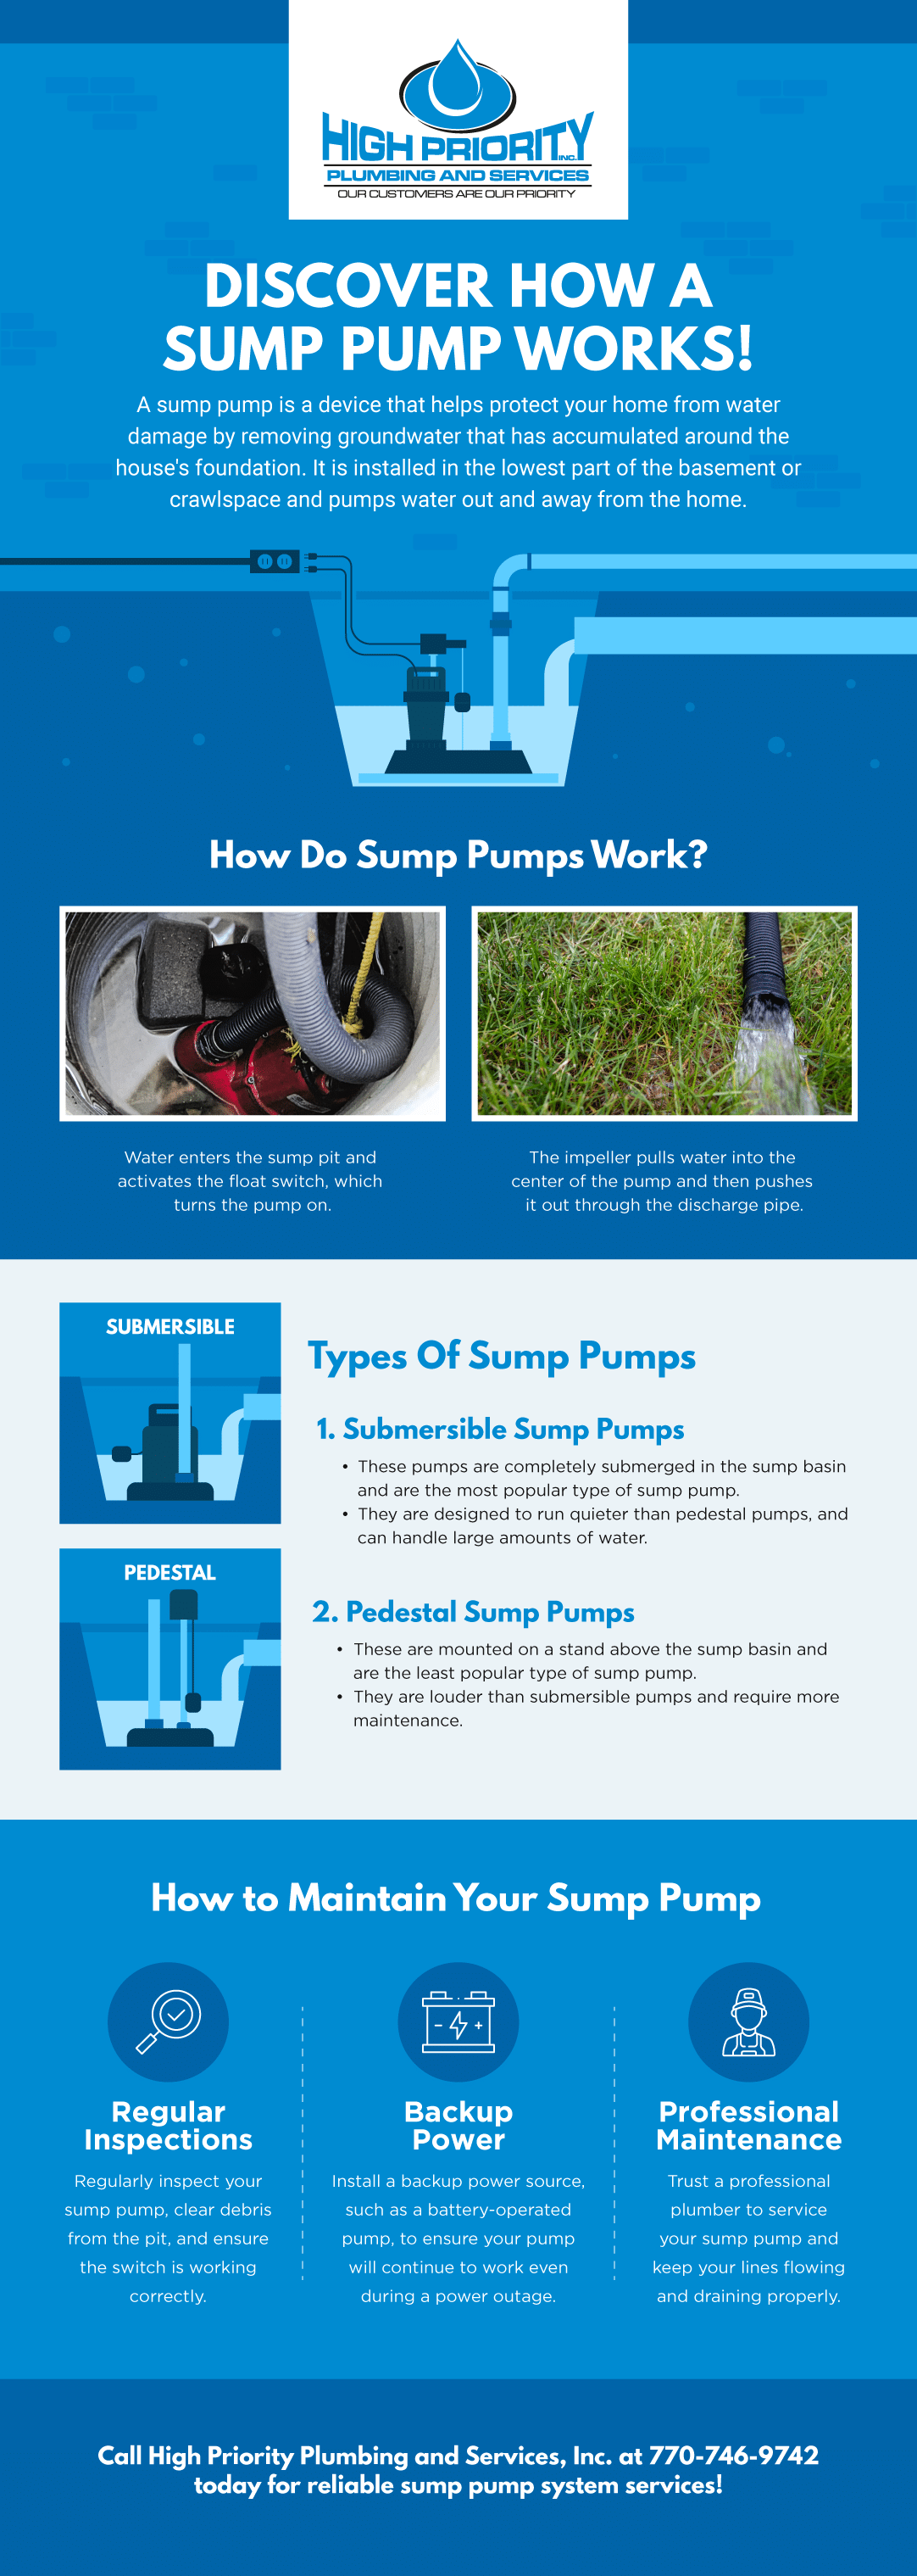 How Does a Sump Pump Work